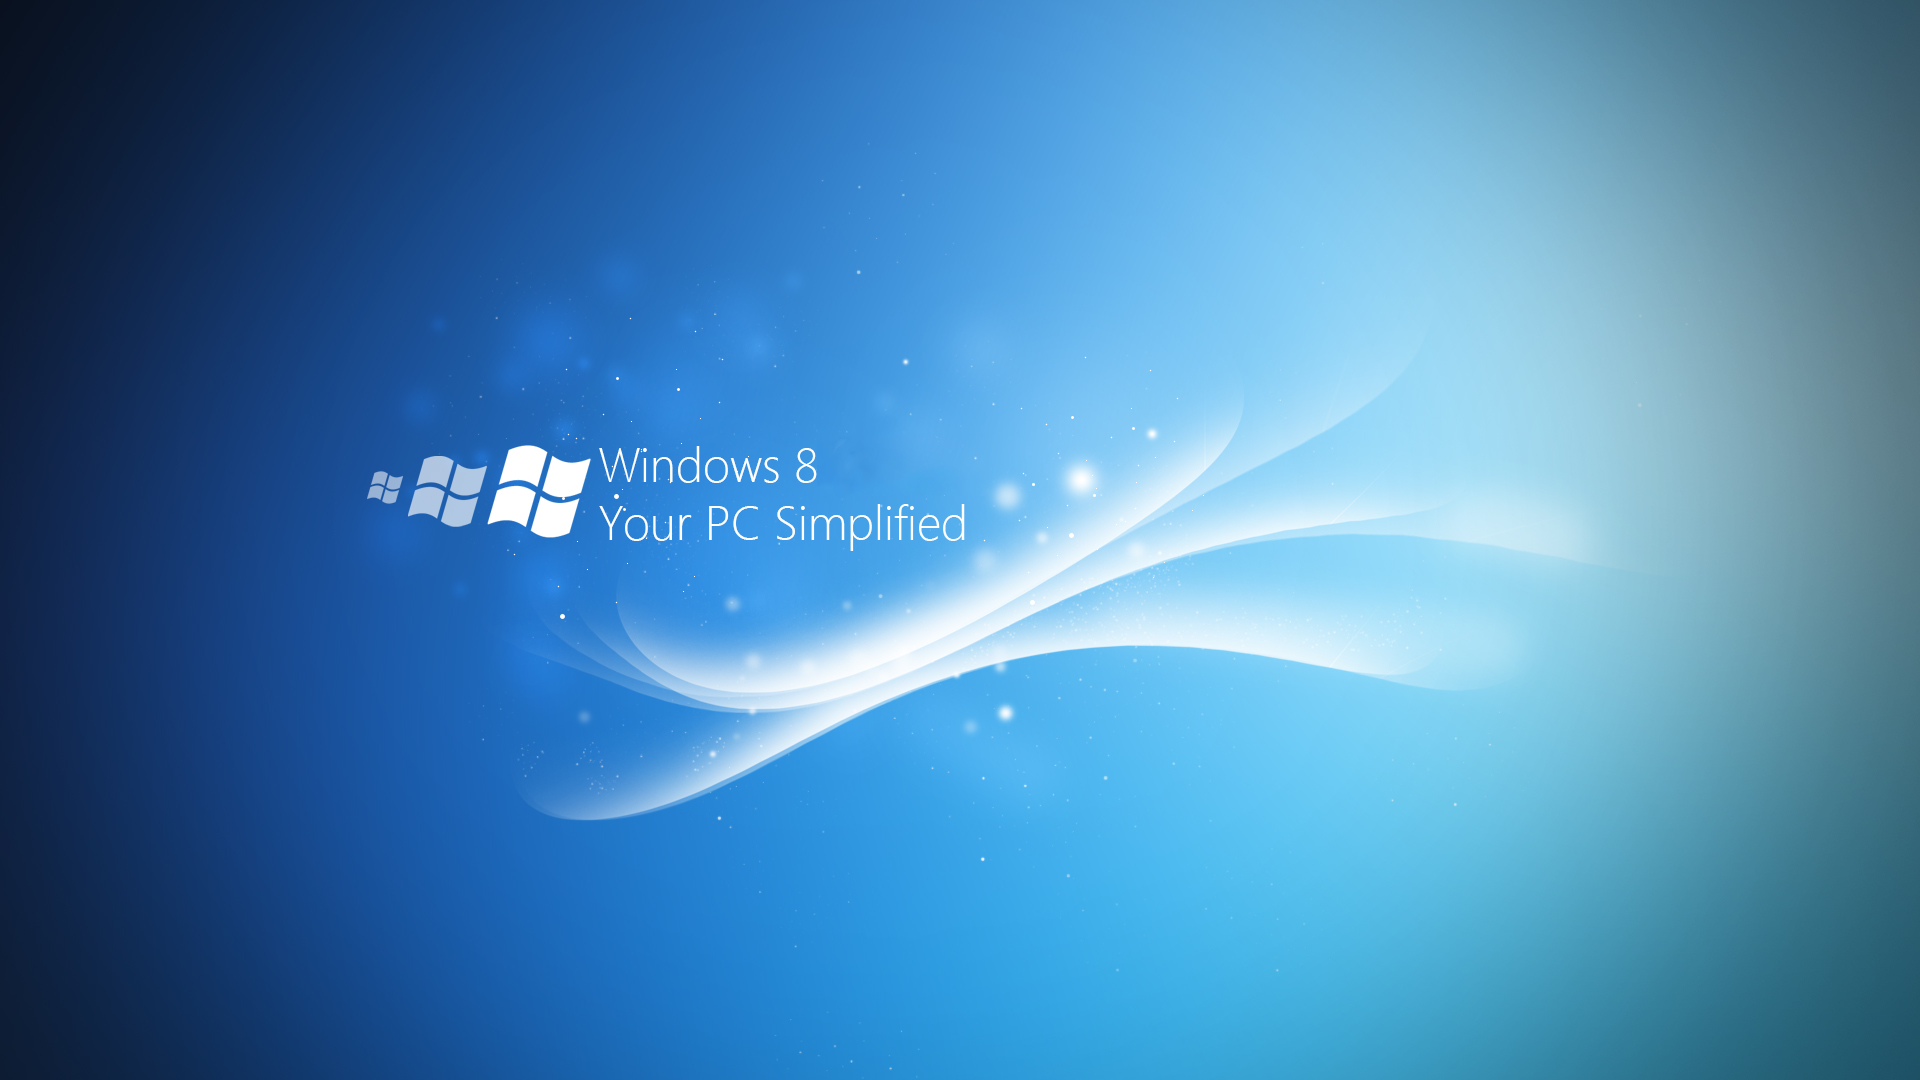 Free download Windows 8 wallpaper 7 Windows 8 Wallpapers [1920x1080